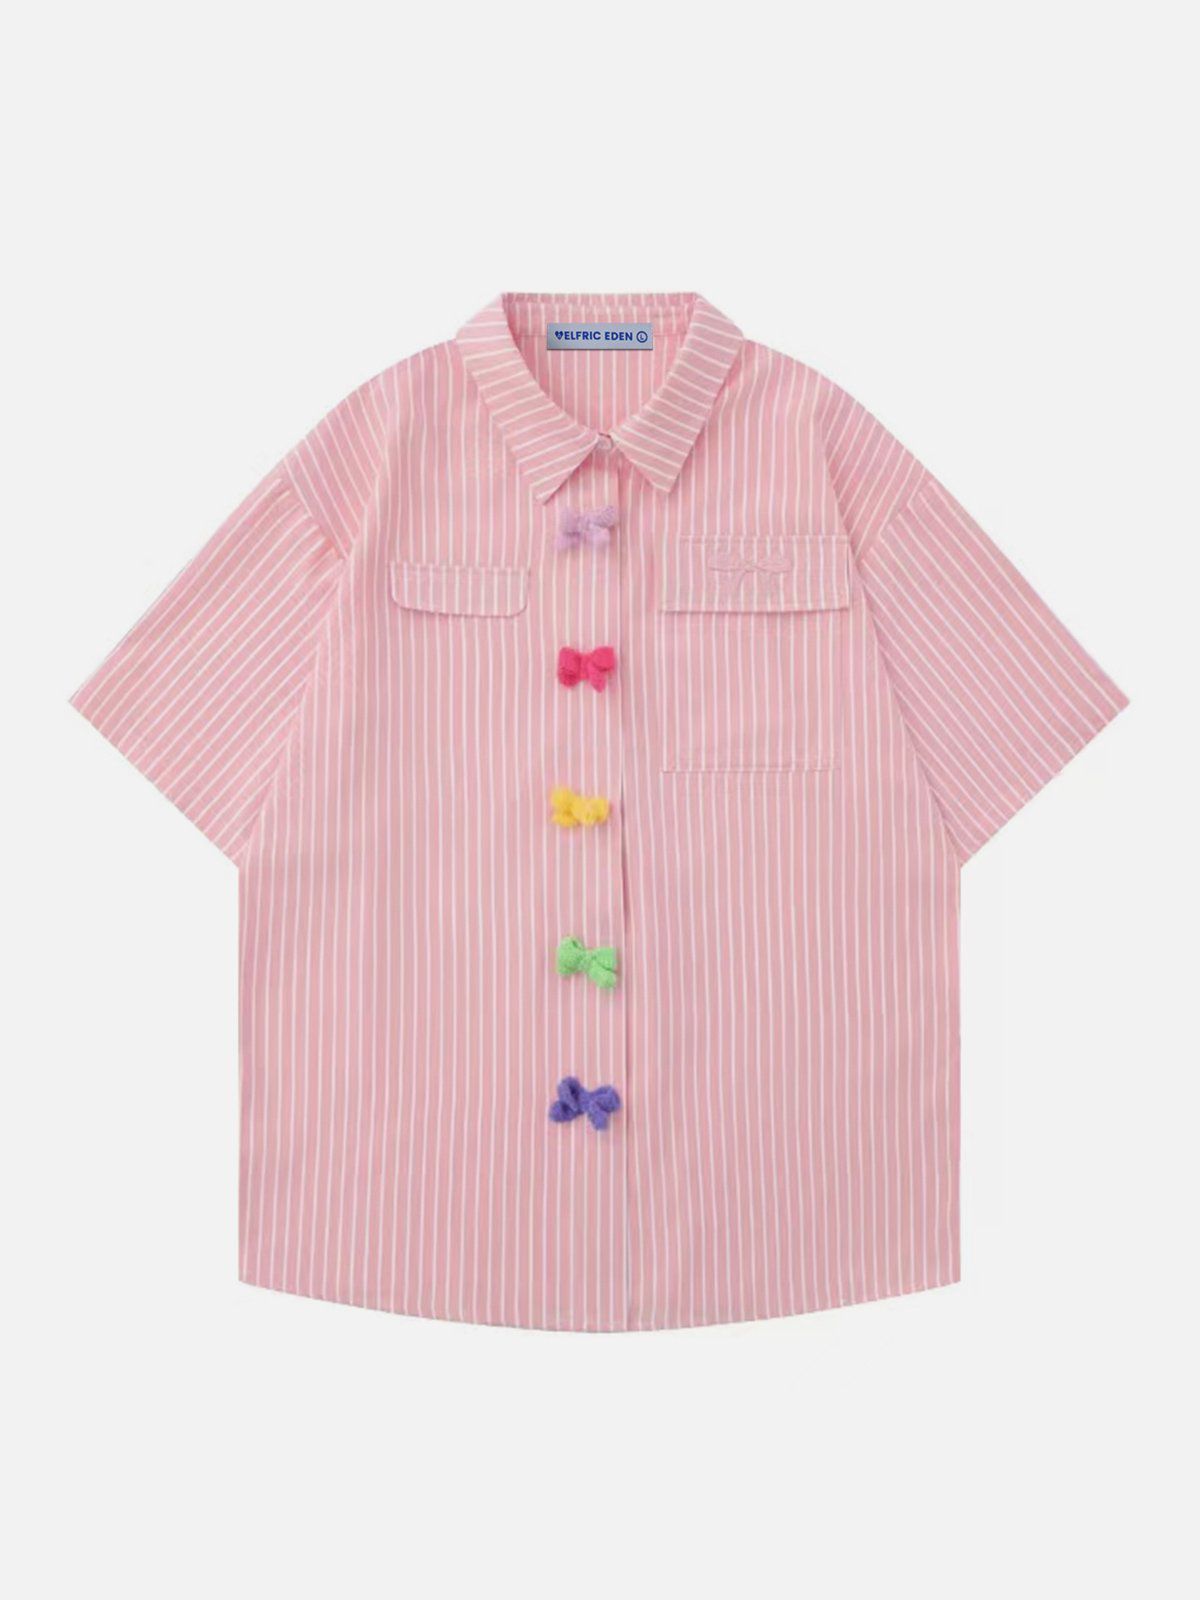 Aelfric Eden Colorful Button Short Sleeve Shirt